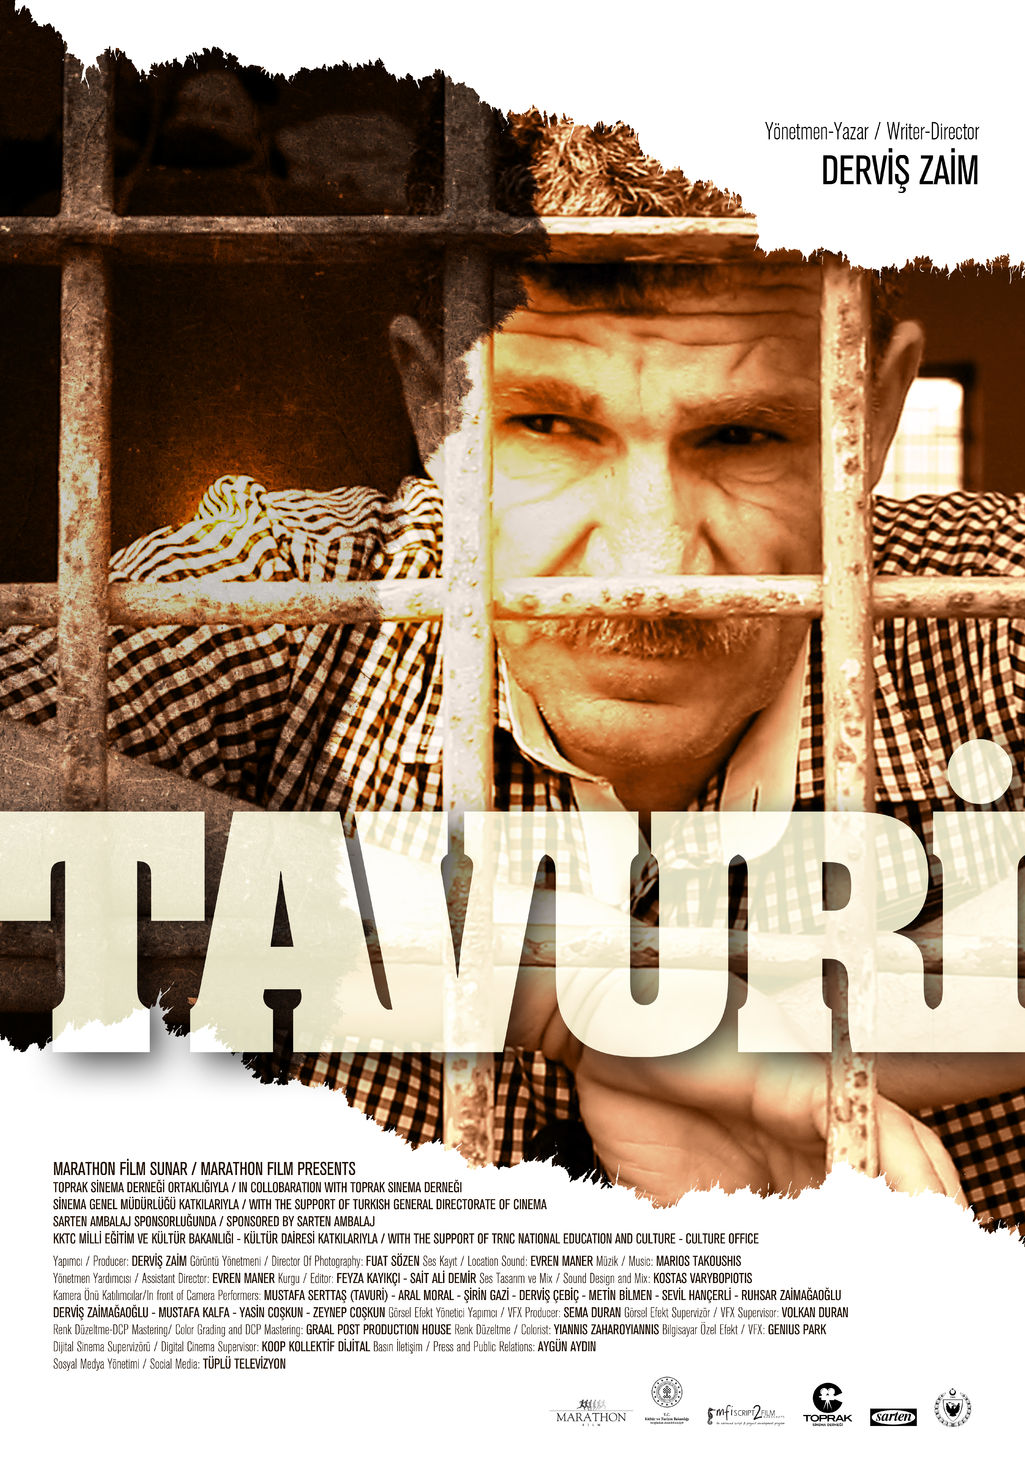 Derviş Zaim'in Tavuri belgeseli Amerika yolcusu